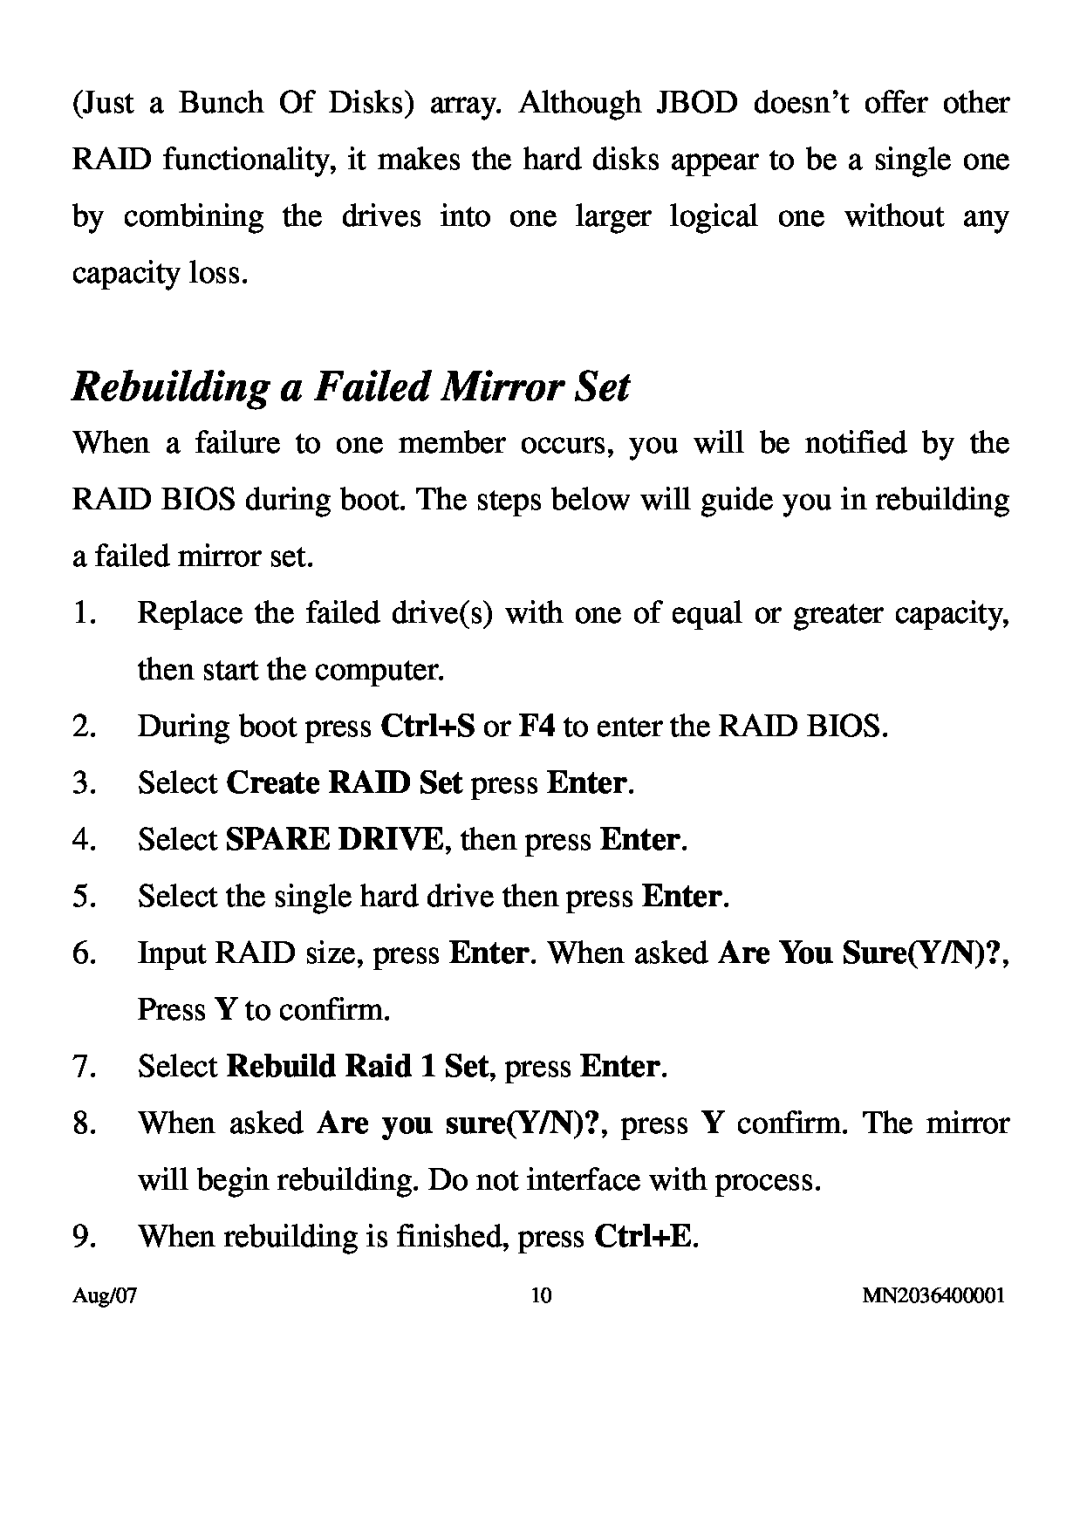 PNY P-DSA2-PCIE-RF user manual Rebuilding a Failed Mirror Set, Select Create RAID Set press Enter 